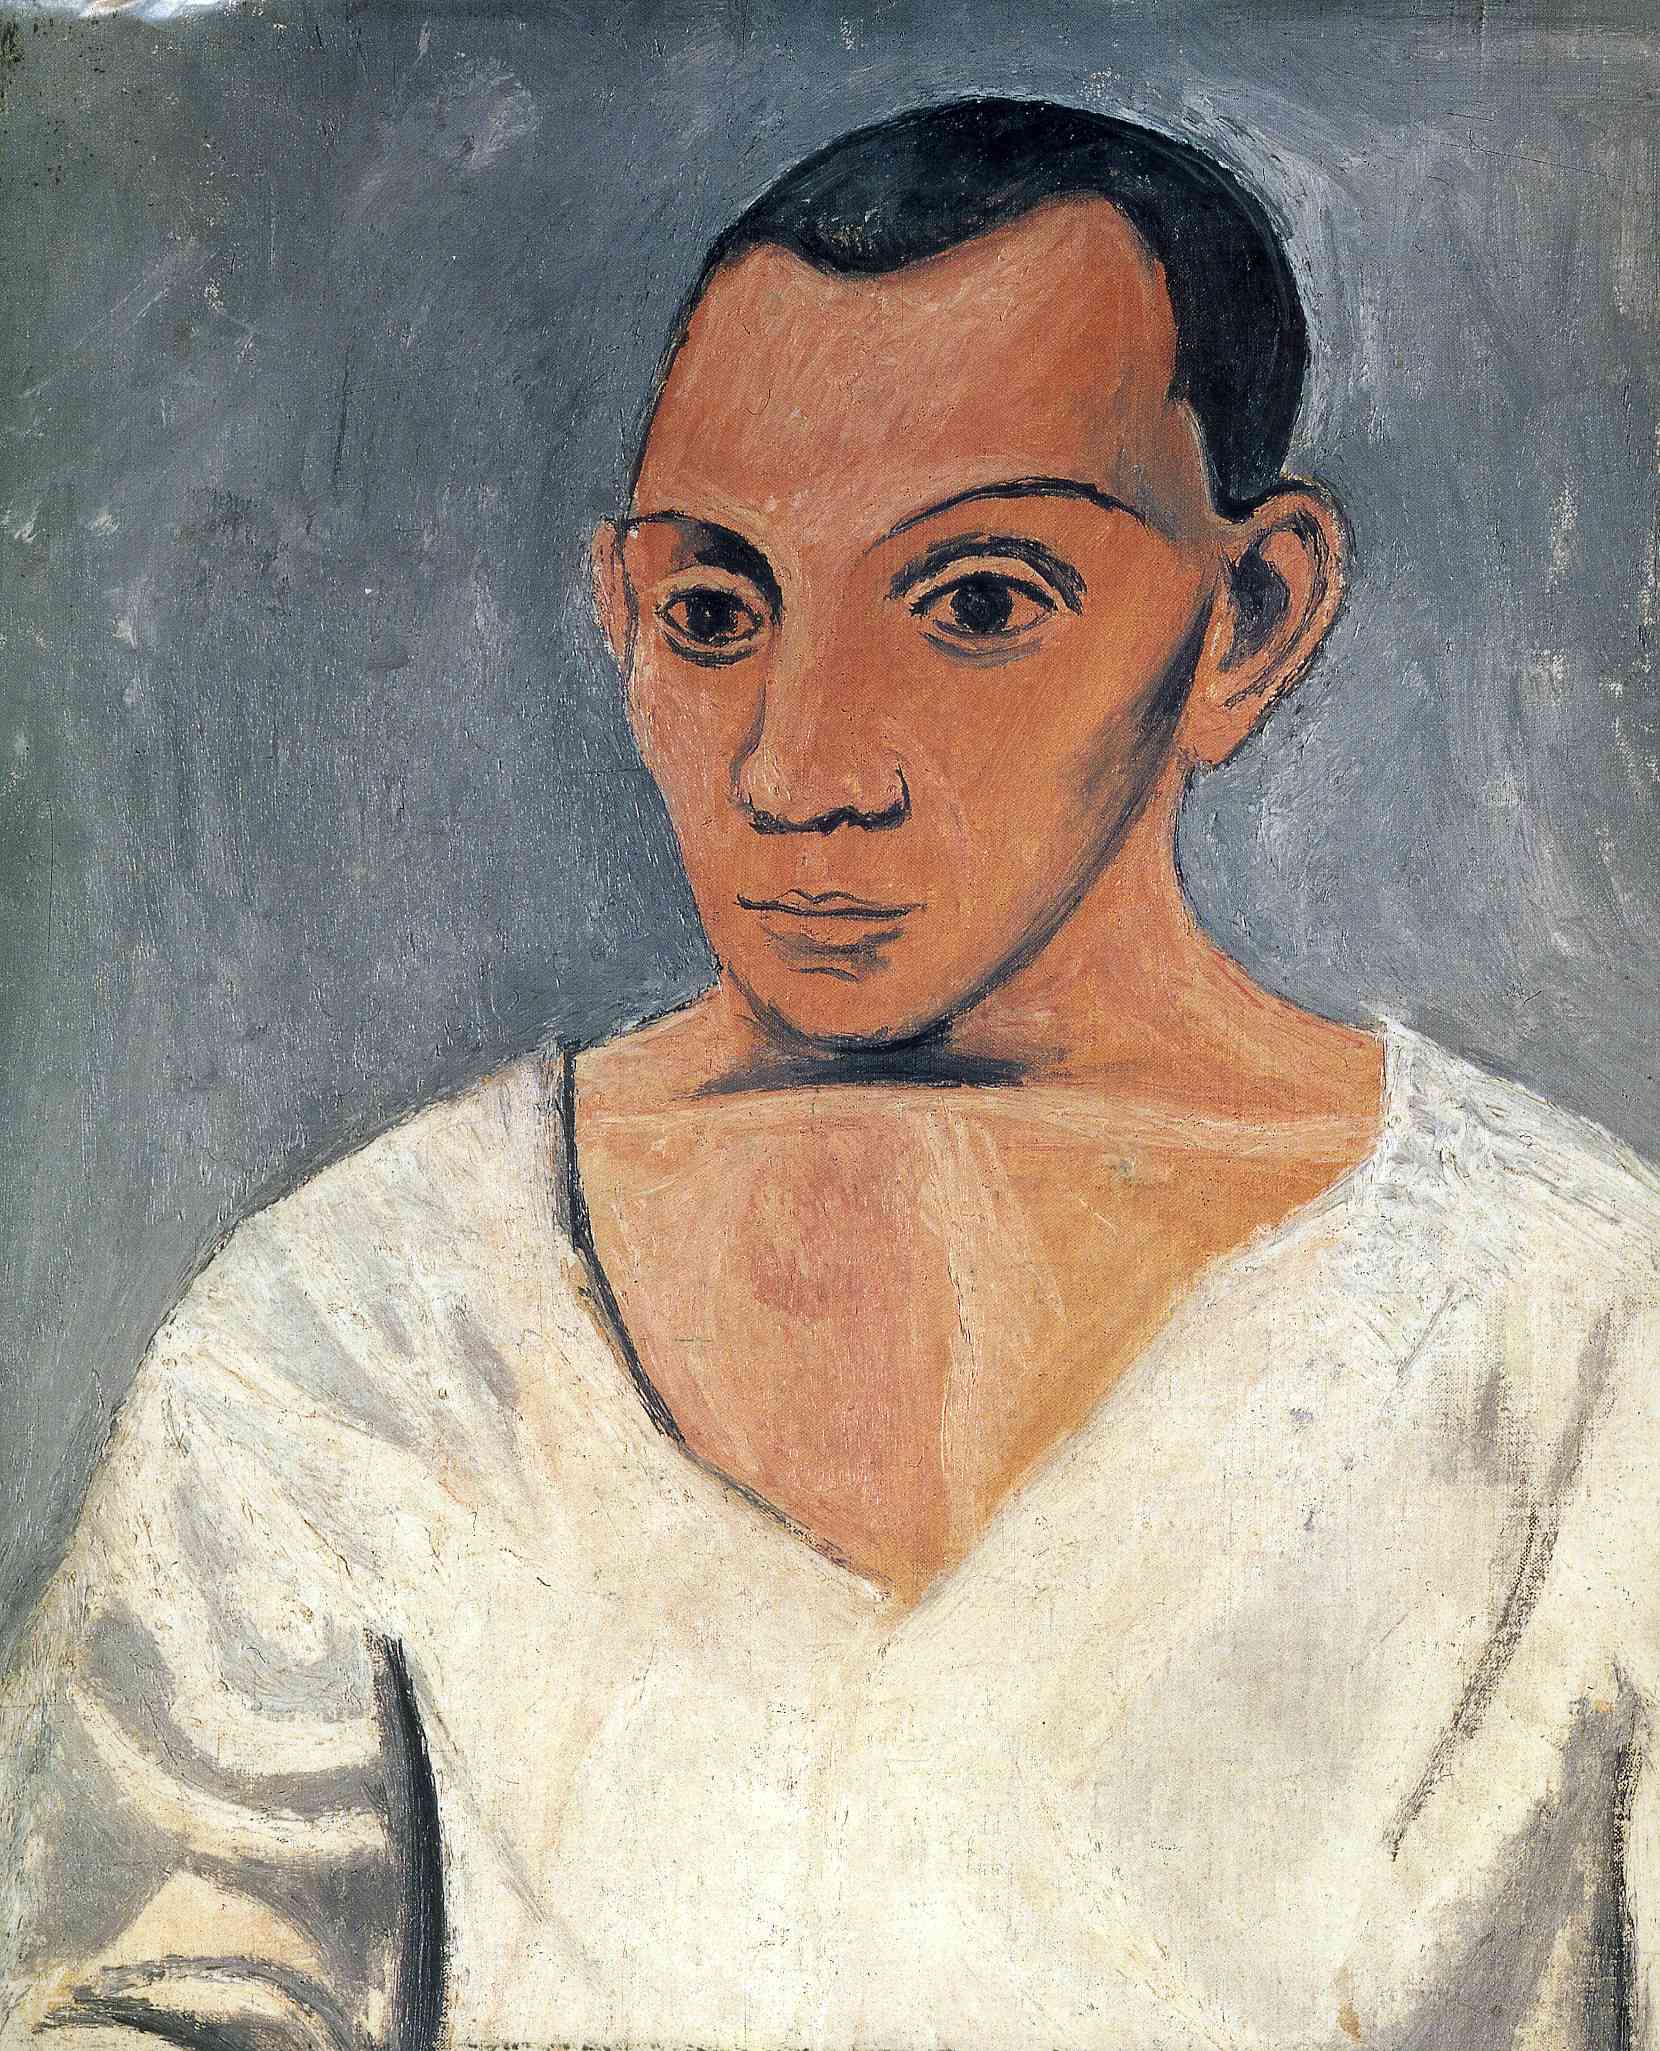 Pablo Picasso - October 25, 1881 - April 8, 1973